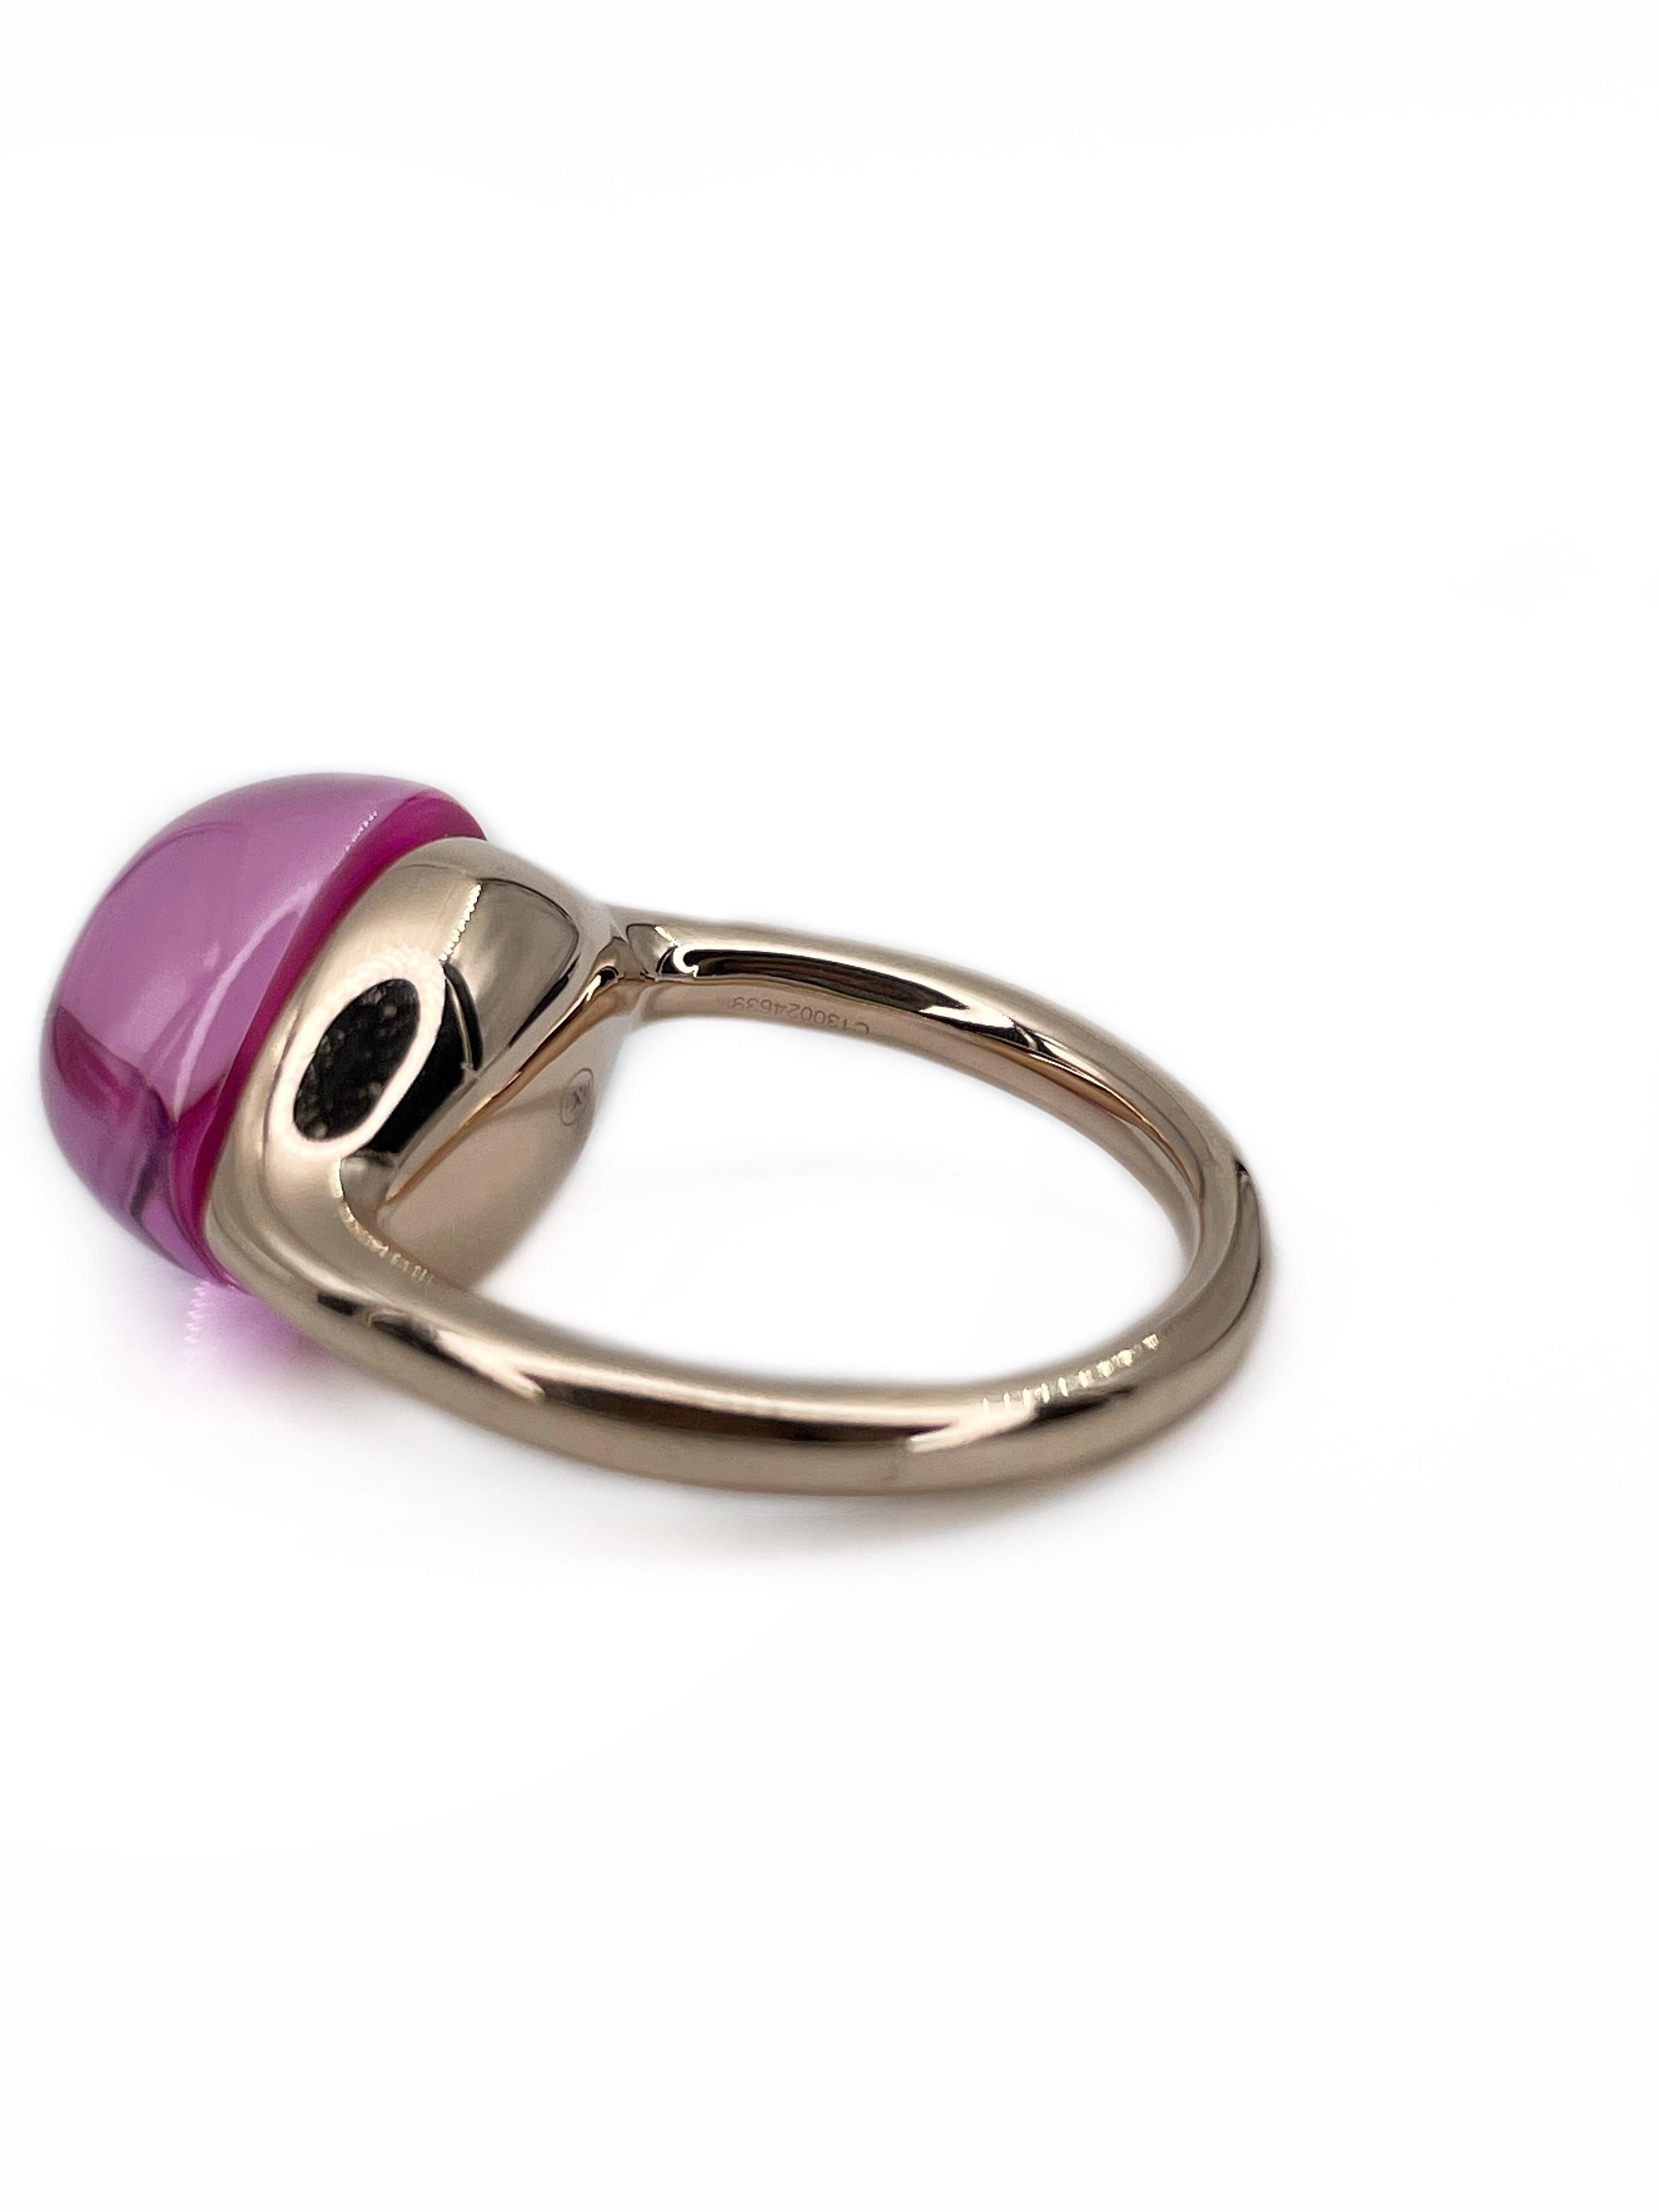 Women's Pomellato “Rouge Passion” 9 Karat Gold Pink Cabochon Cut Sapphire Cocktail Ring